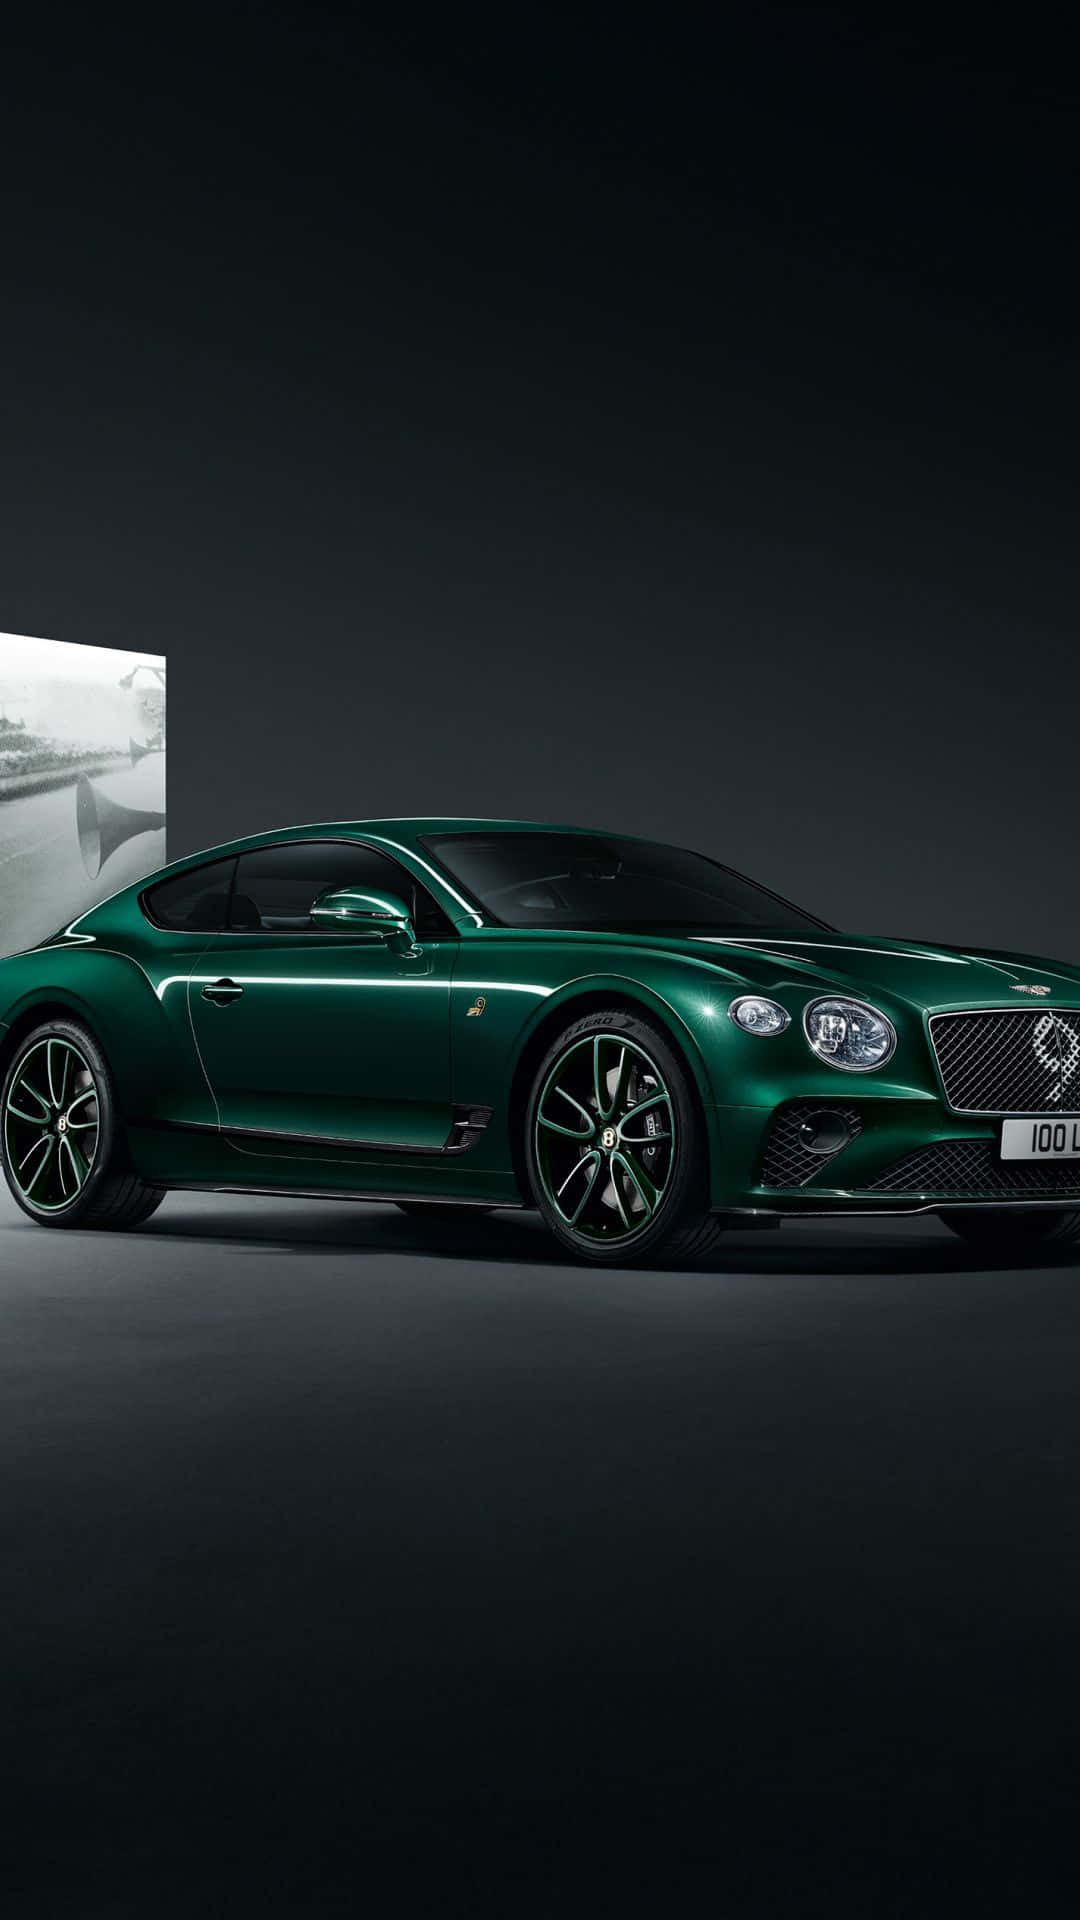 Sfondoiphone Di Una Stupenda Bentley Verde. Sfondo